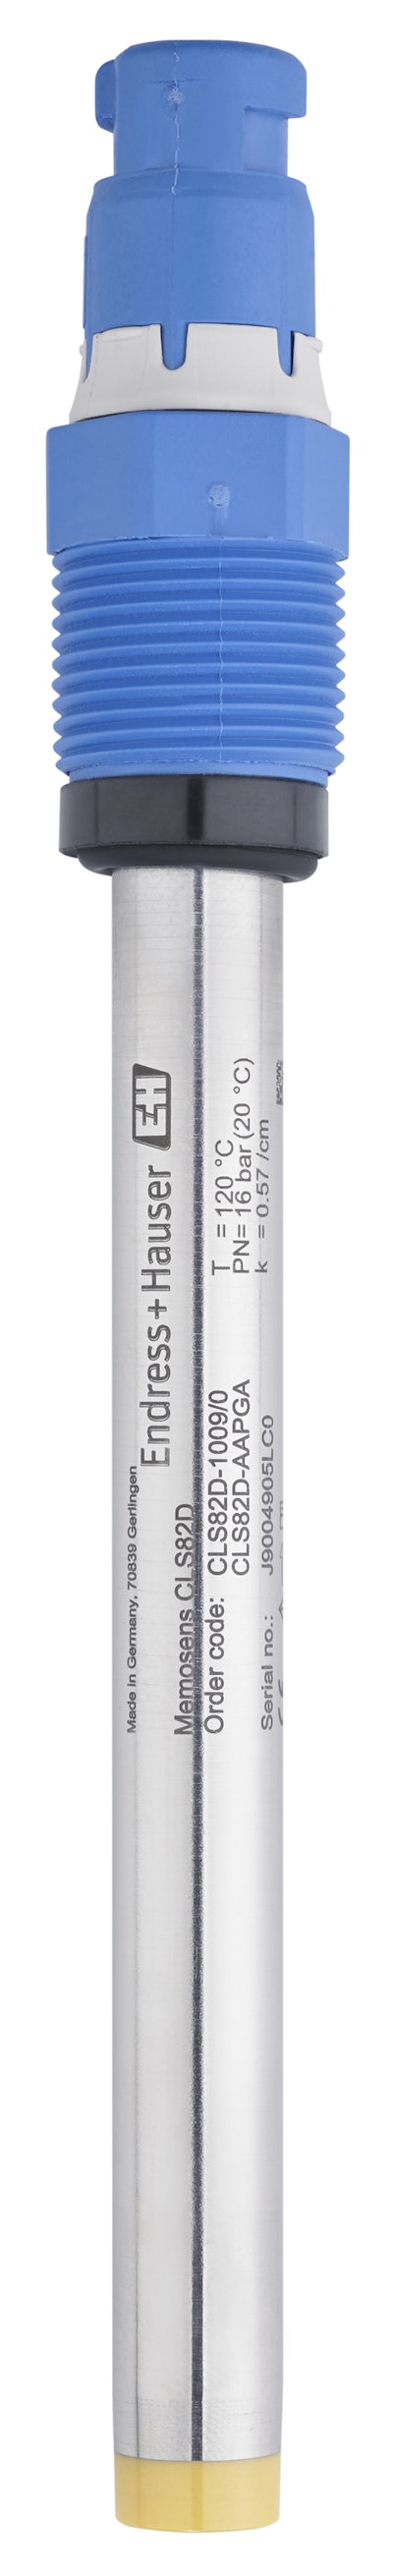 Endress+Hauser Memosens CLS82D sensor